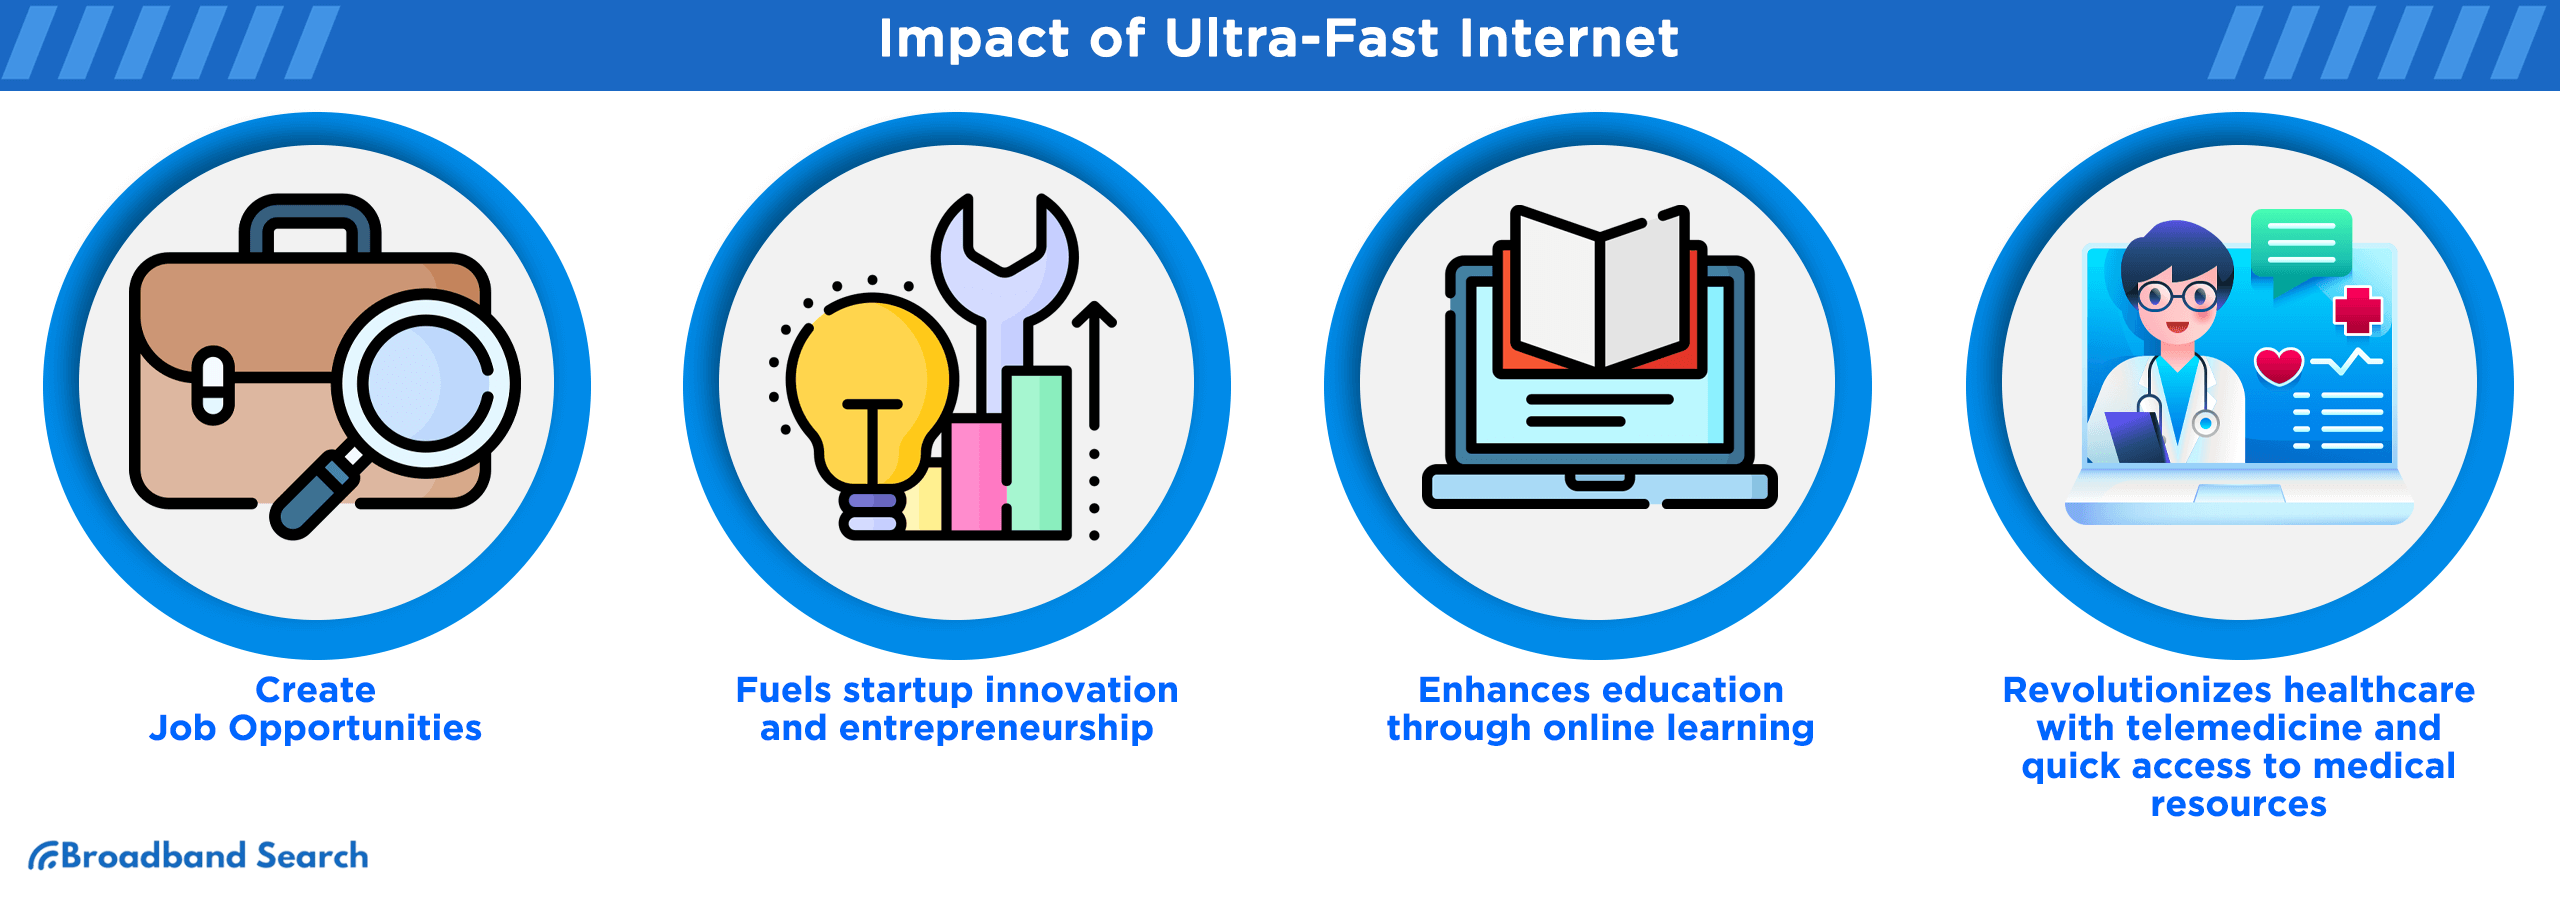 Impact of ultra-fast internet